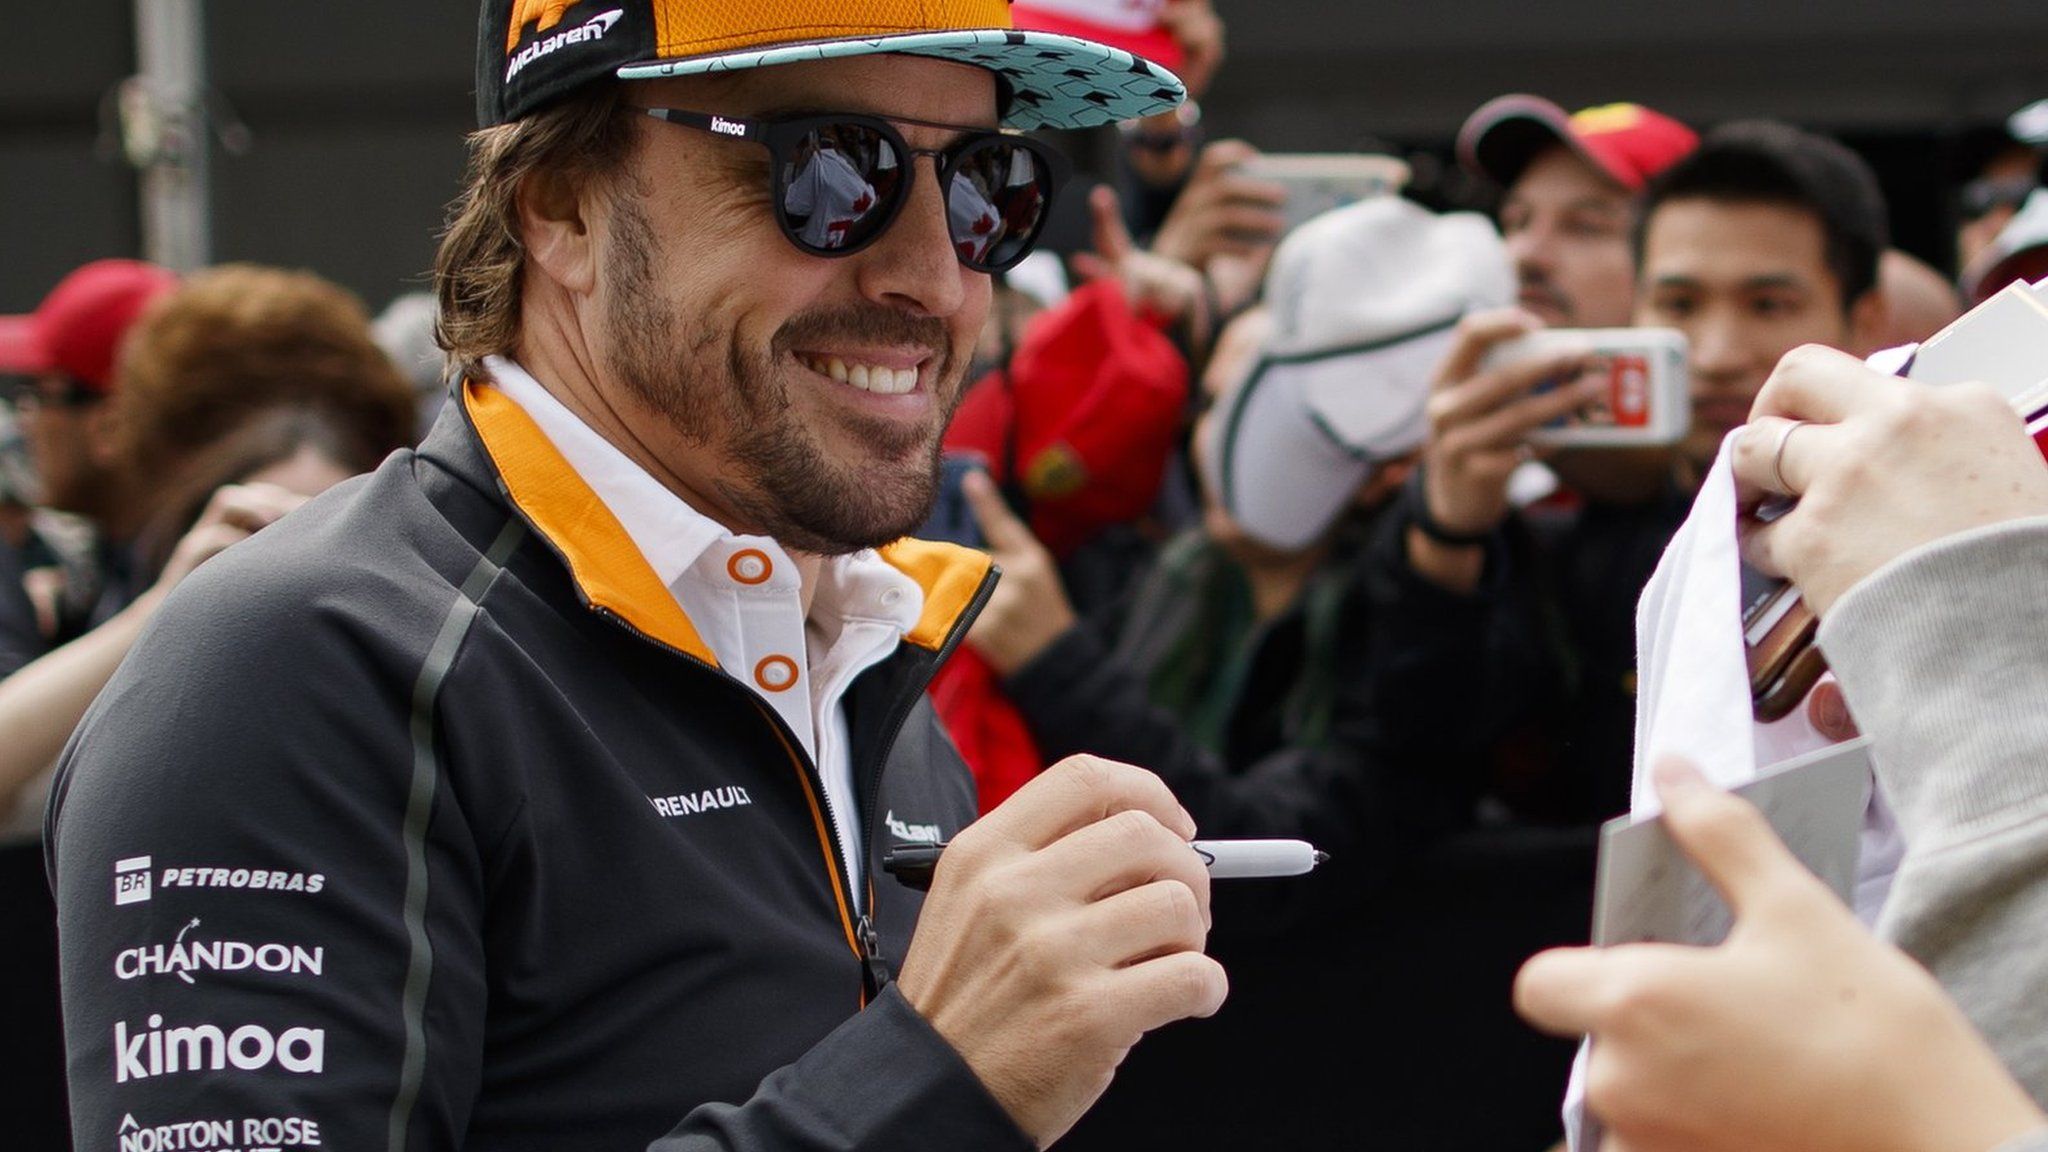 Mclaren F1 driver Fernando Alonso